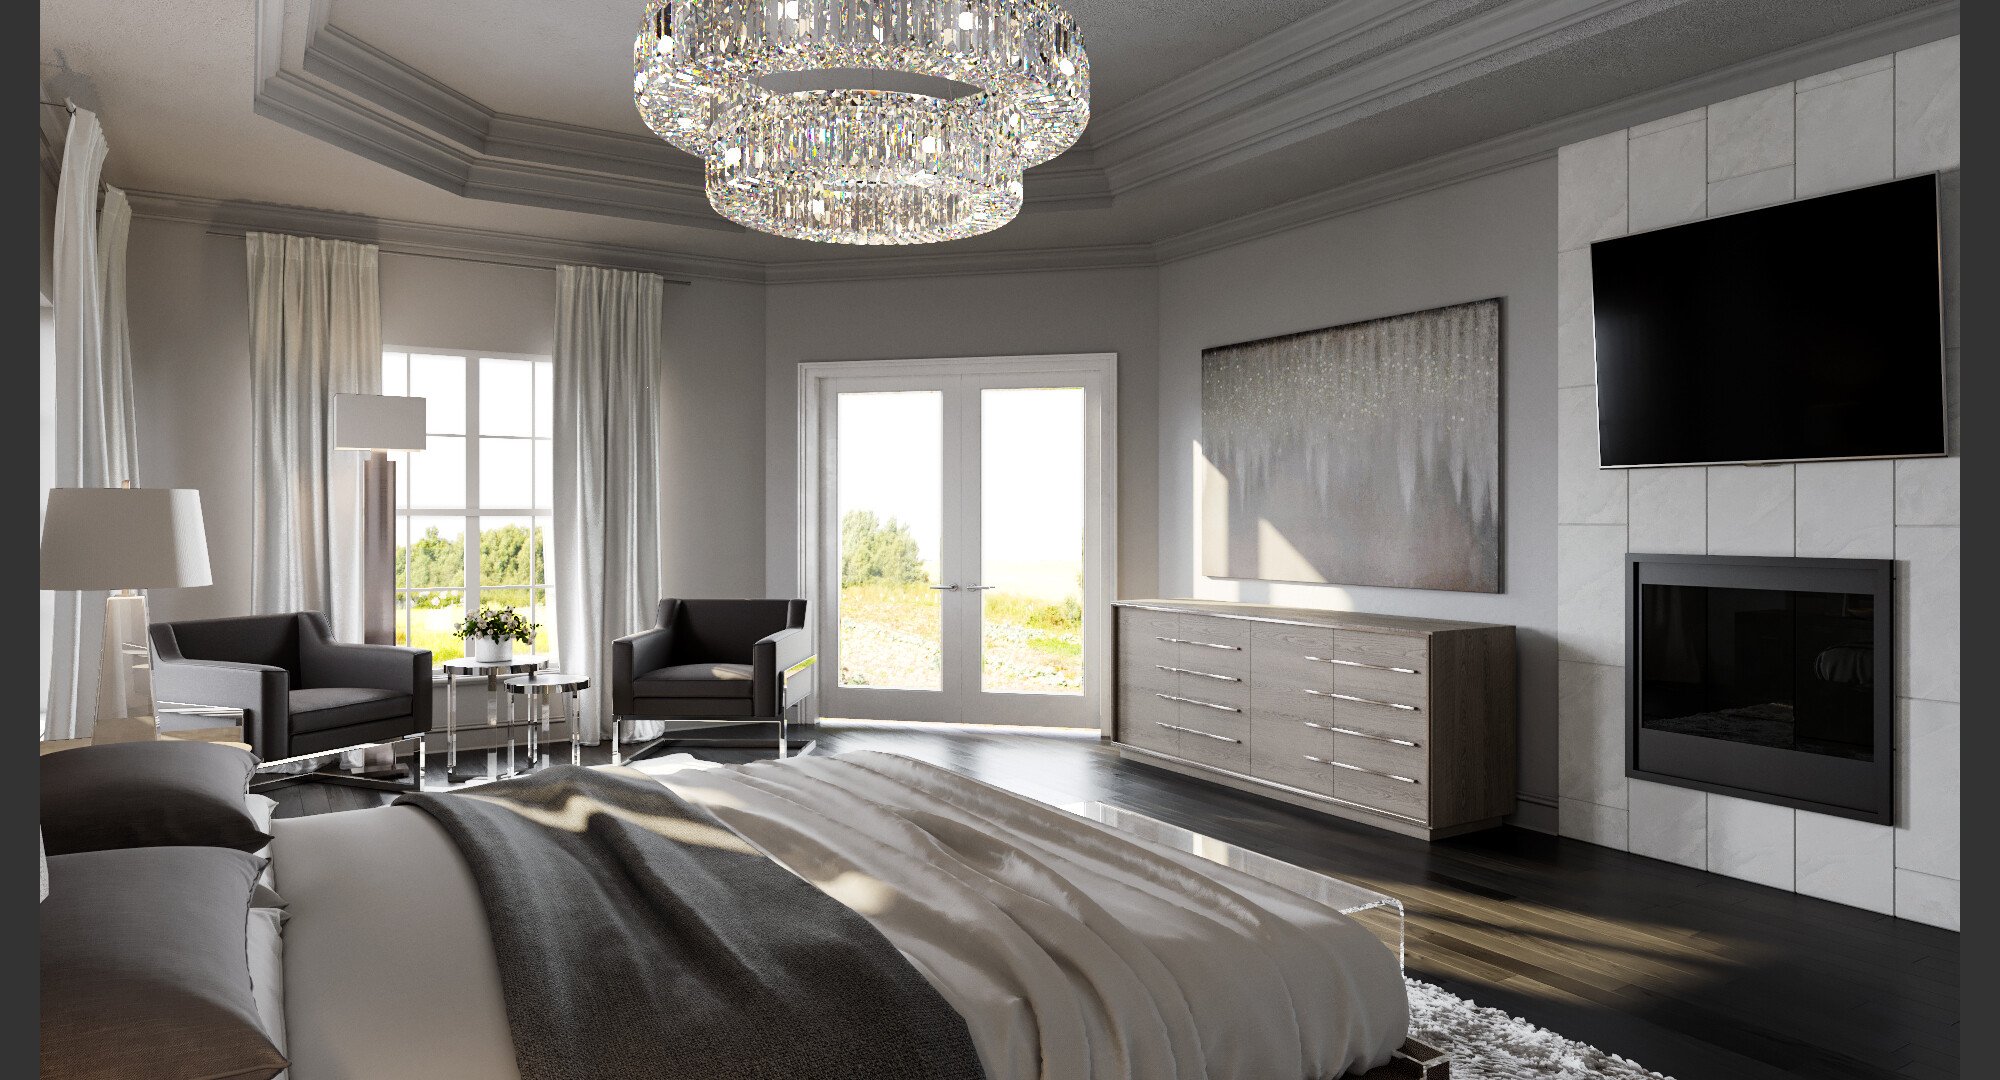 Online Bedroom Design interior design service 3